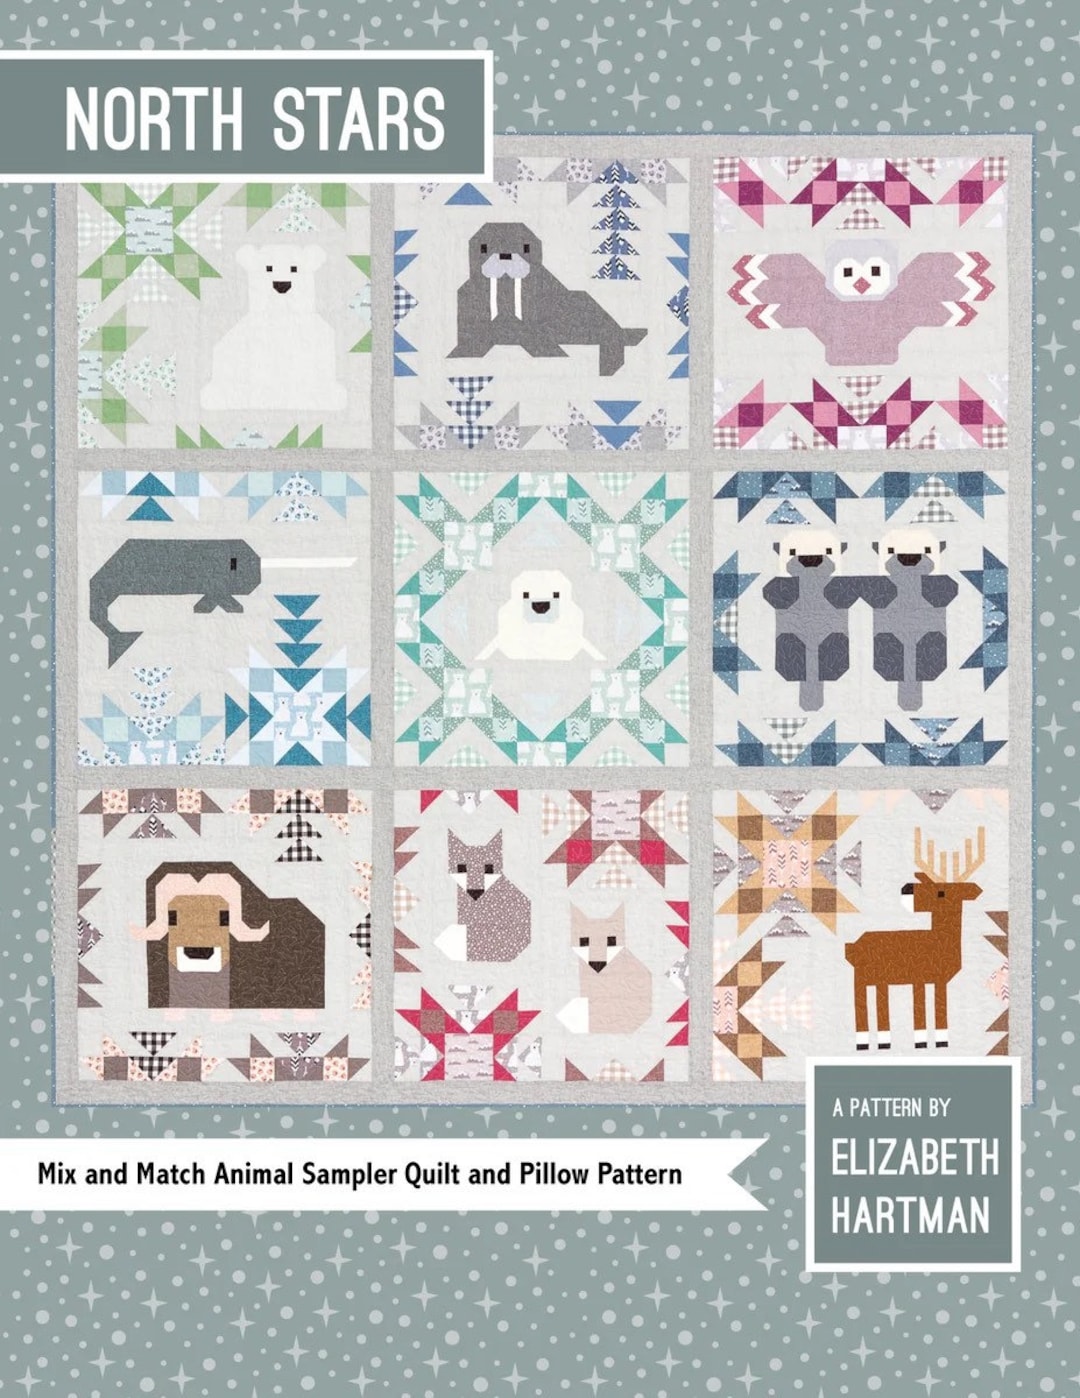 New Elizabeth Hartman Quilt Patterns, arrived : January 24,…